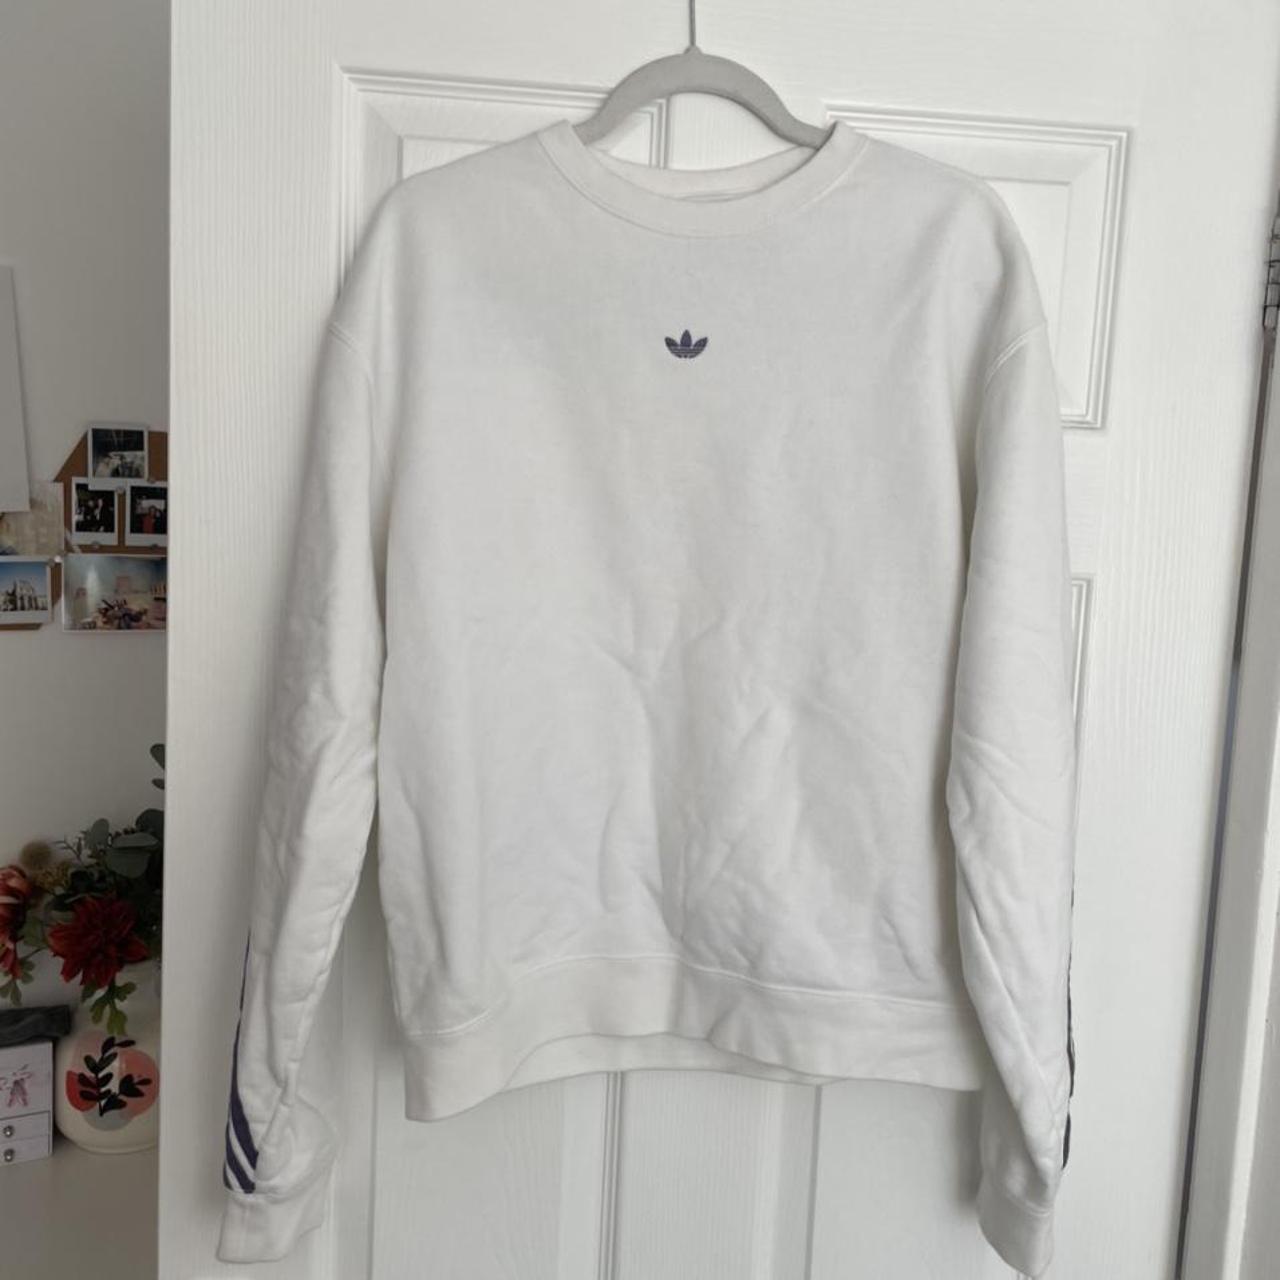 Adidas sweatshirt, medium, white with purple 3... - Depop